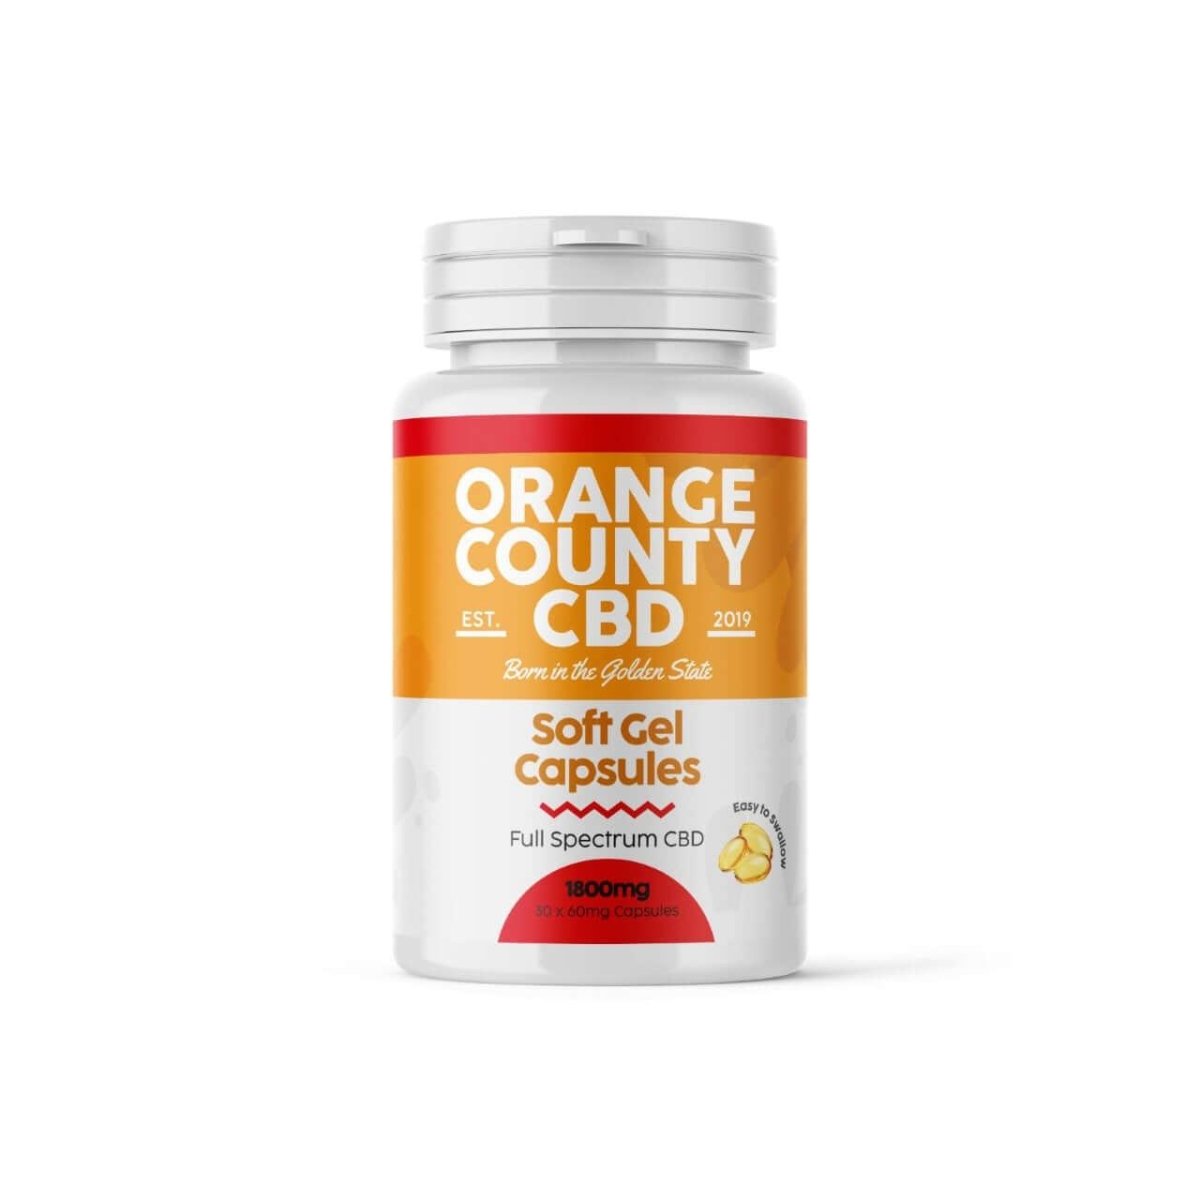 Orange County CBD - Full Spectrum Soft Gel CBD Capsules - 60mg per capsule - Mowbray CBD